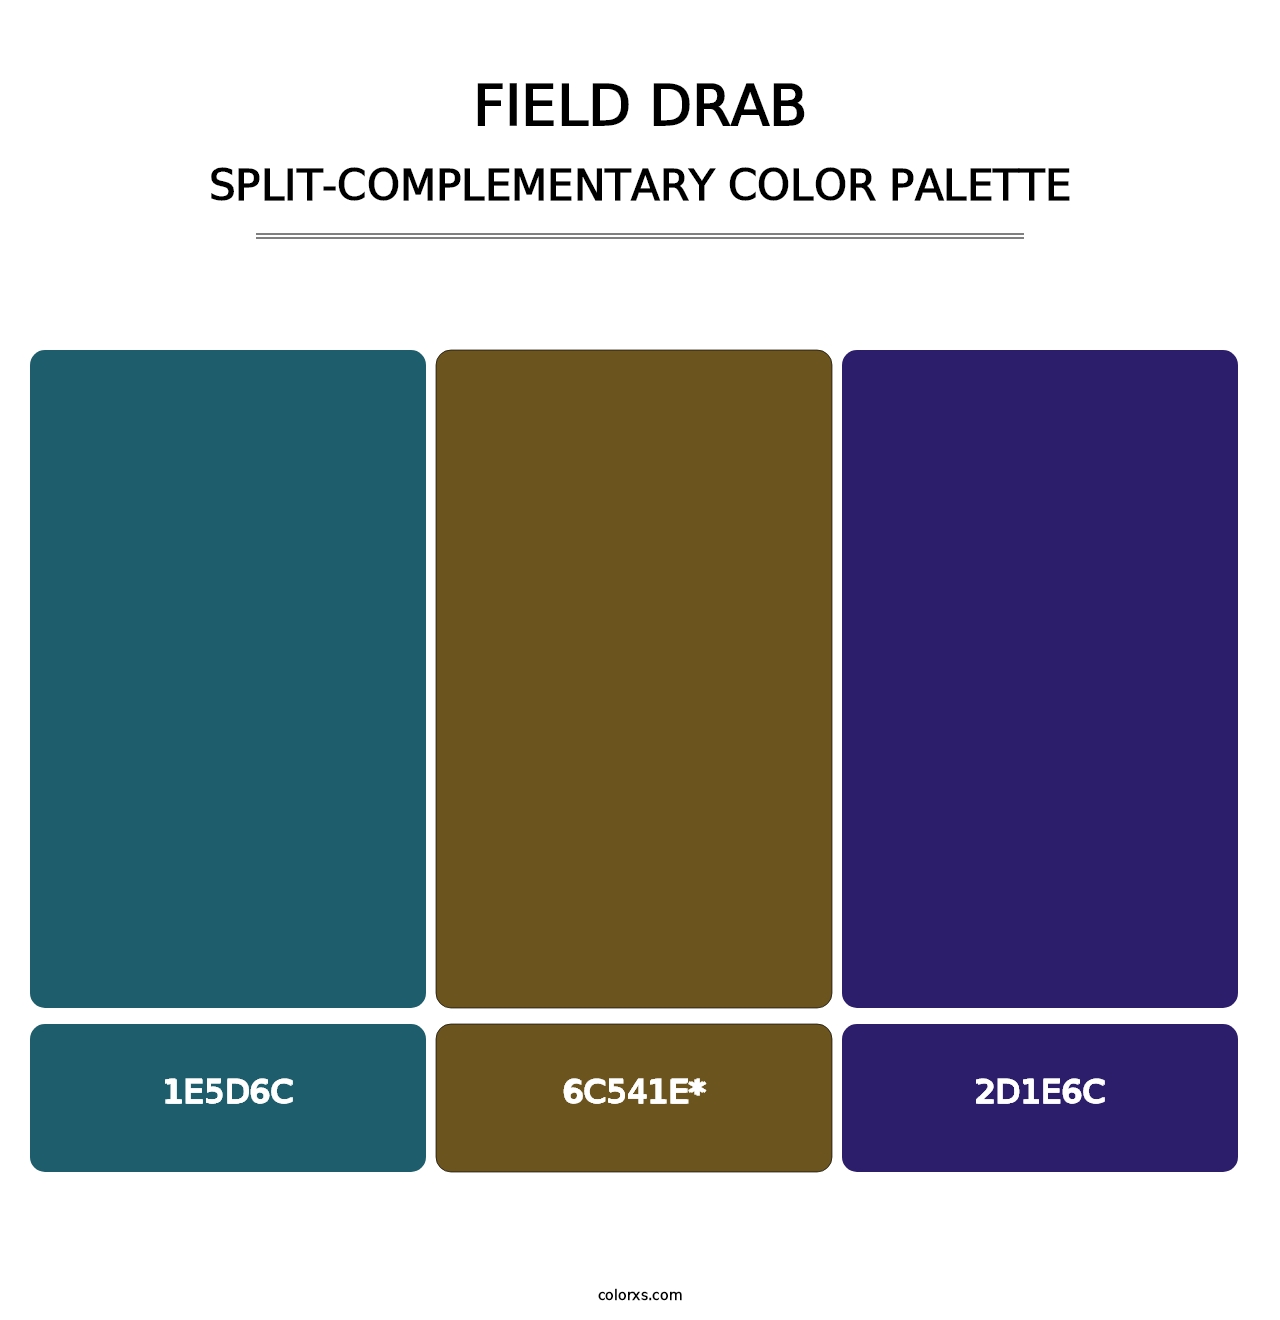 Field Drab - Split-Complementary Color Palette